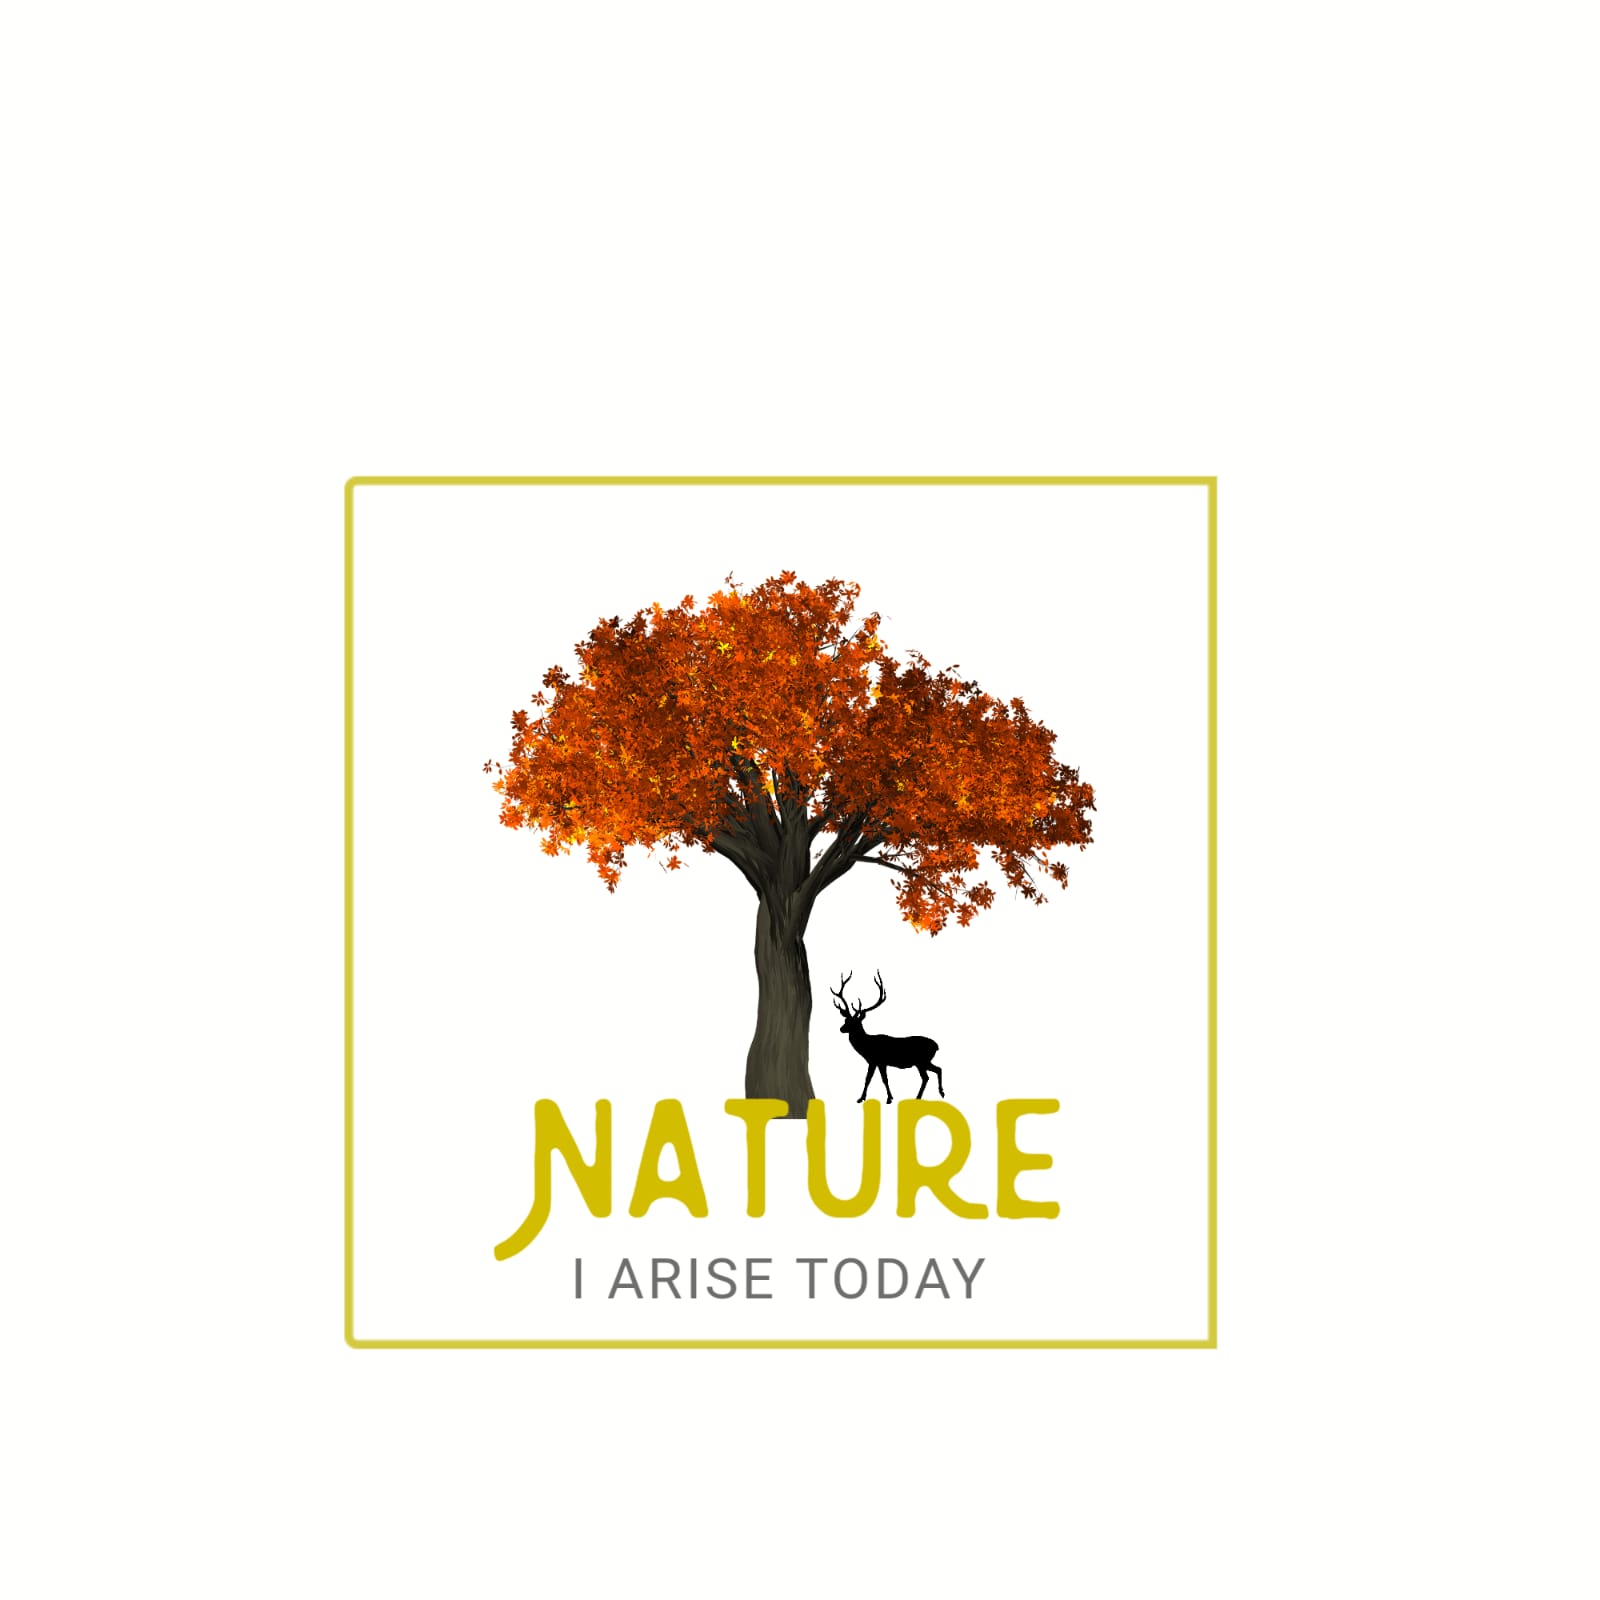 T - Shirt Logo, Nature Beauty logo, Animal Logo, Construction Company Logo, ETC preview image.